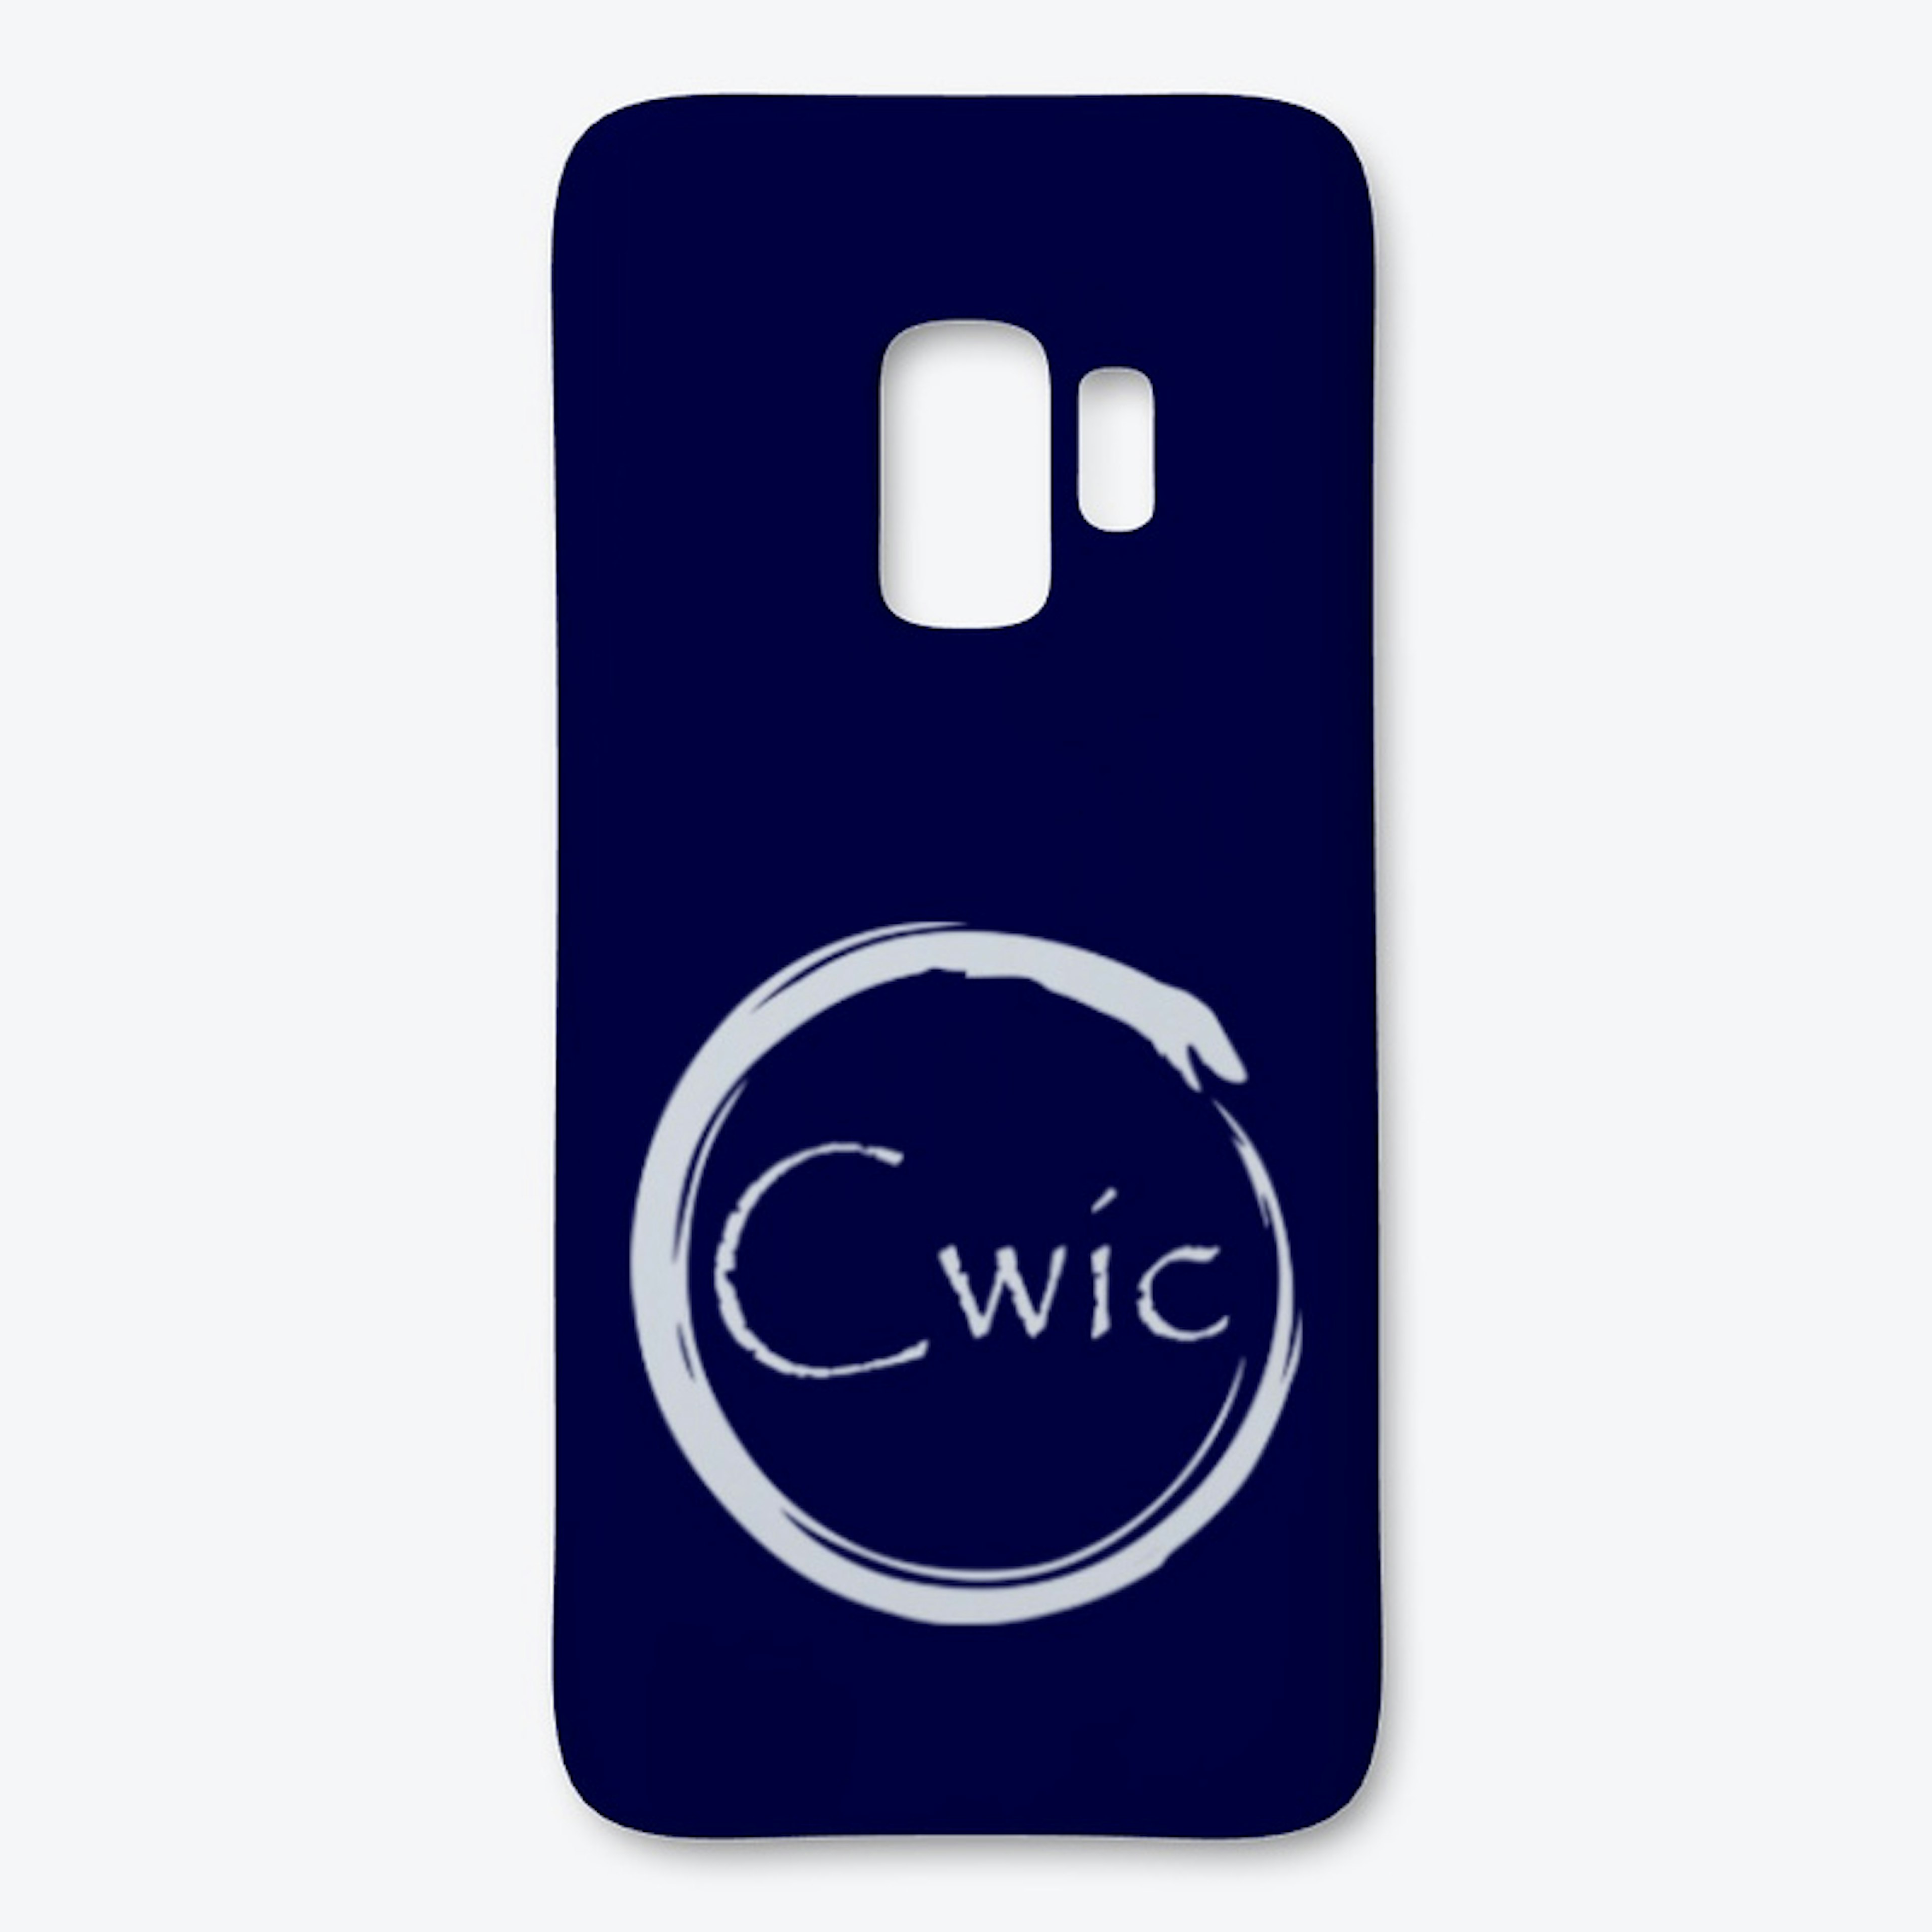 Cwic White Logo Phone Case